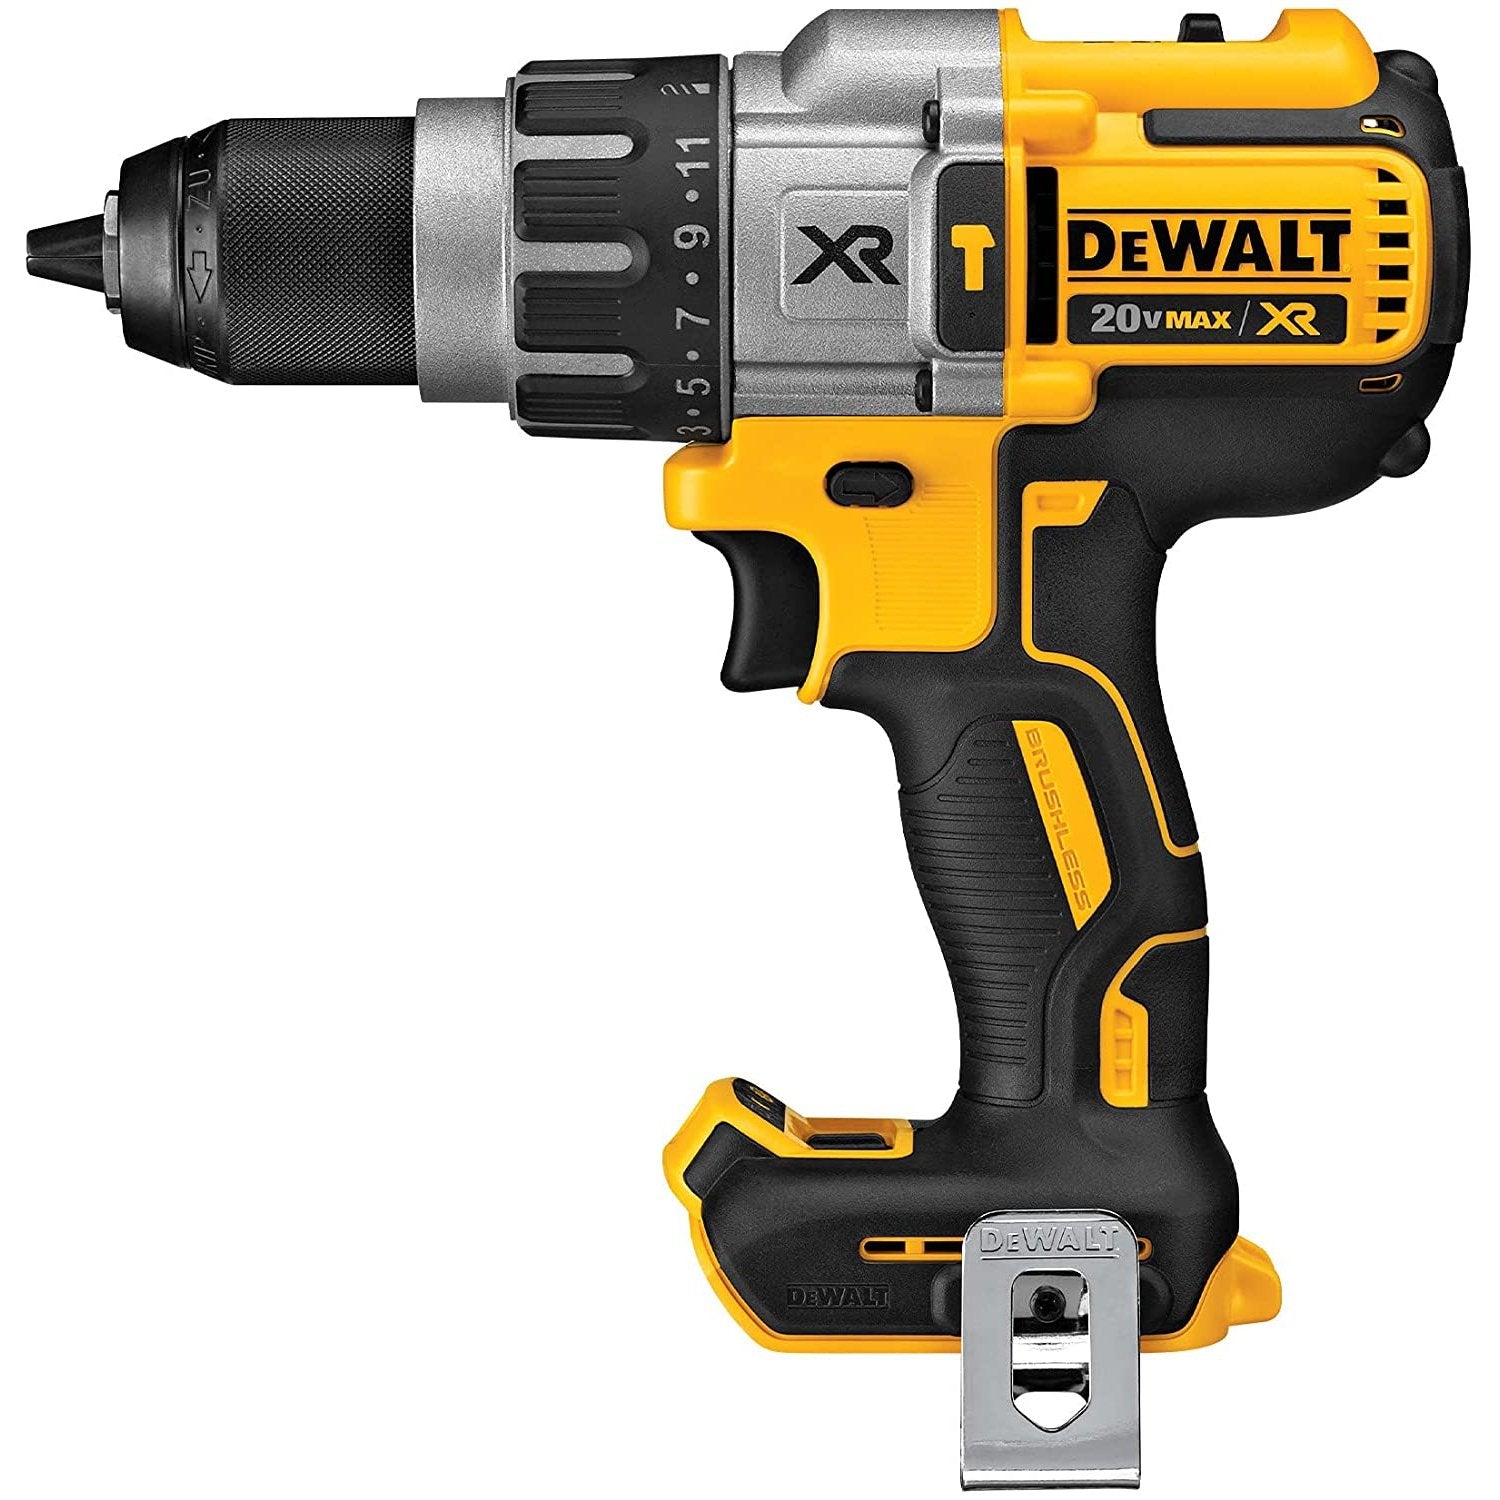 DEWALT 20V MAX XR Hammer Drill, Brushless, 3-Speed, Tool Only DCD996B